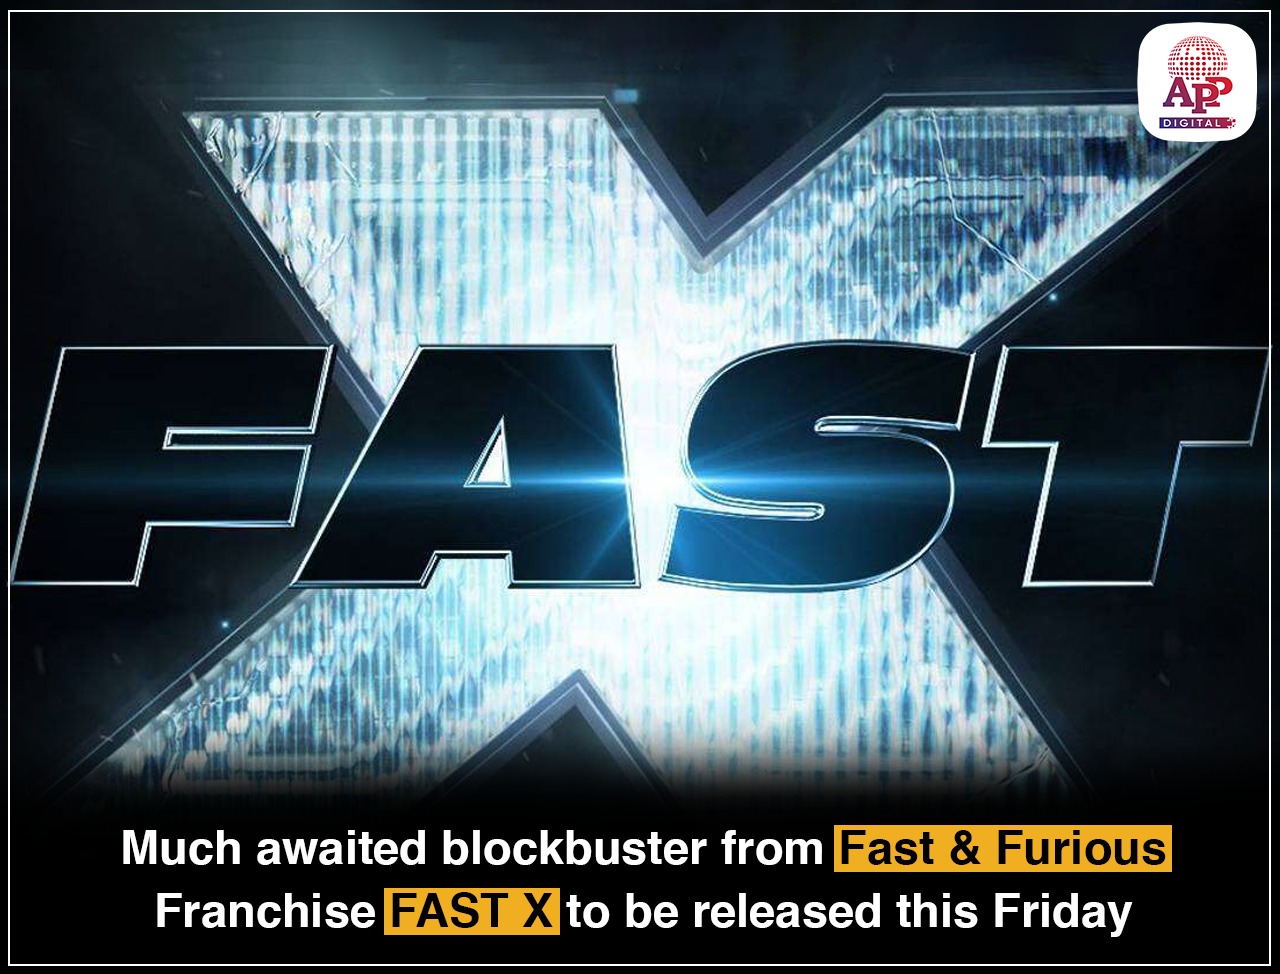 Release Date set for Vin Diesel's latest blockbuster